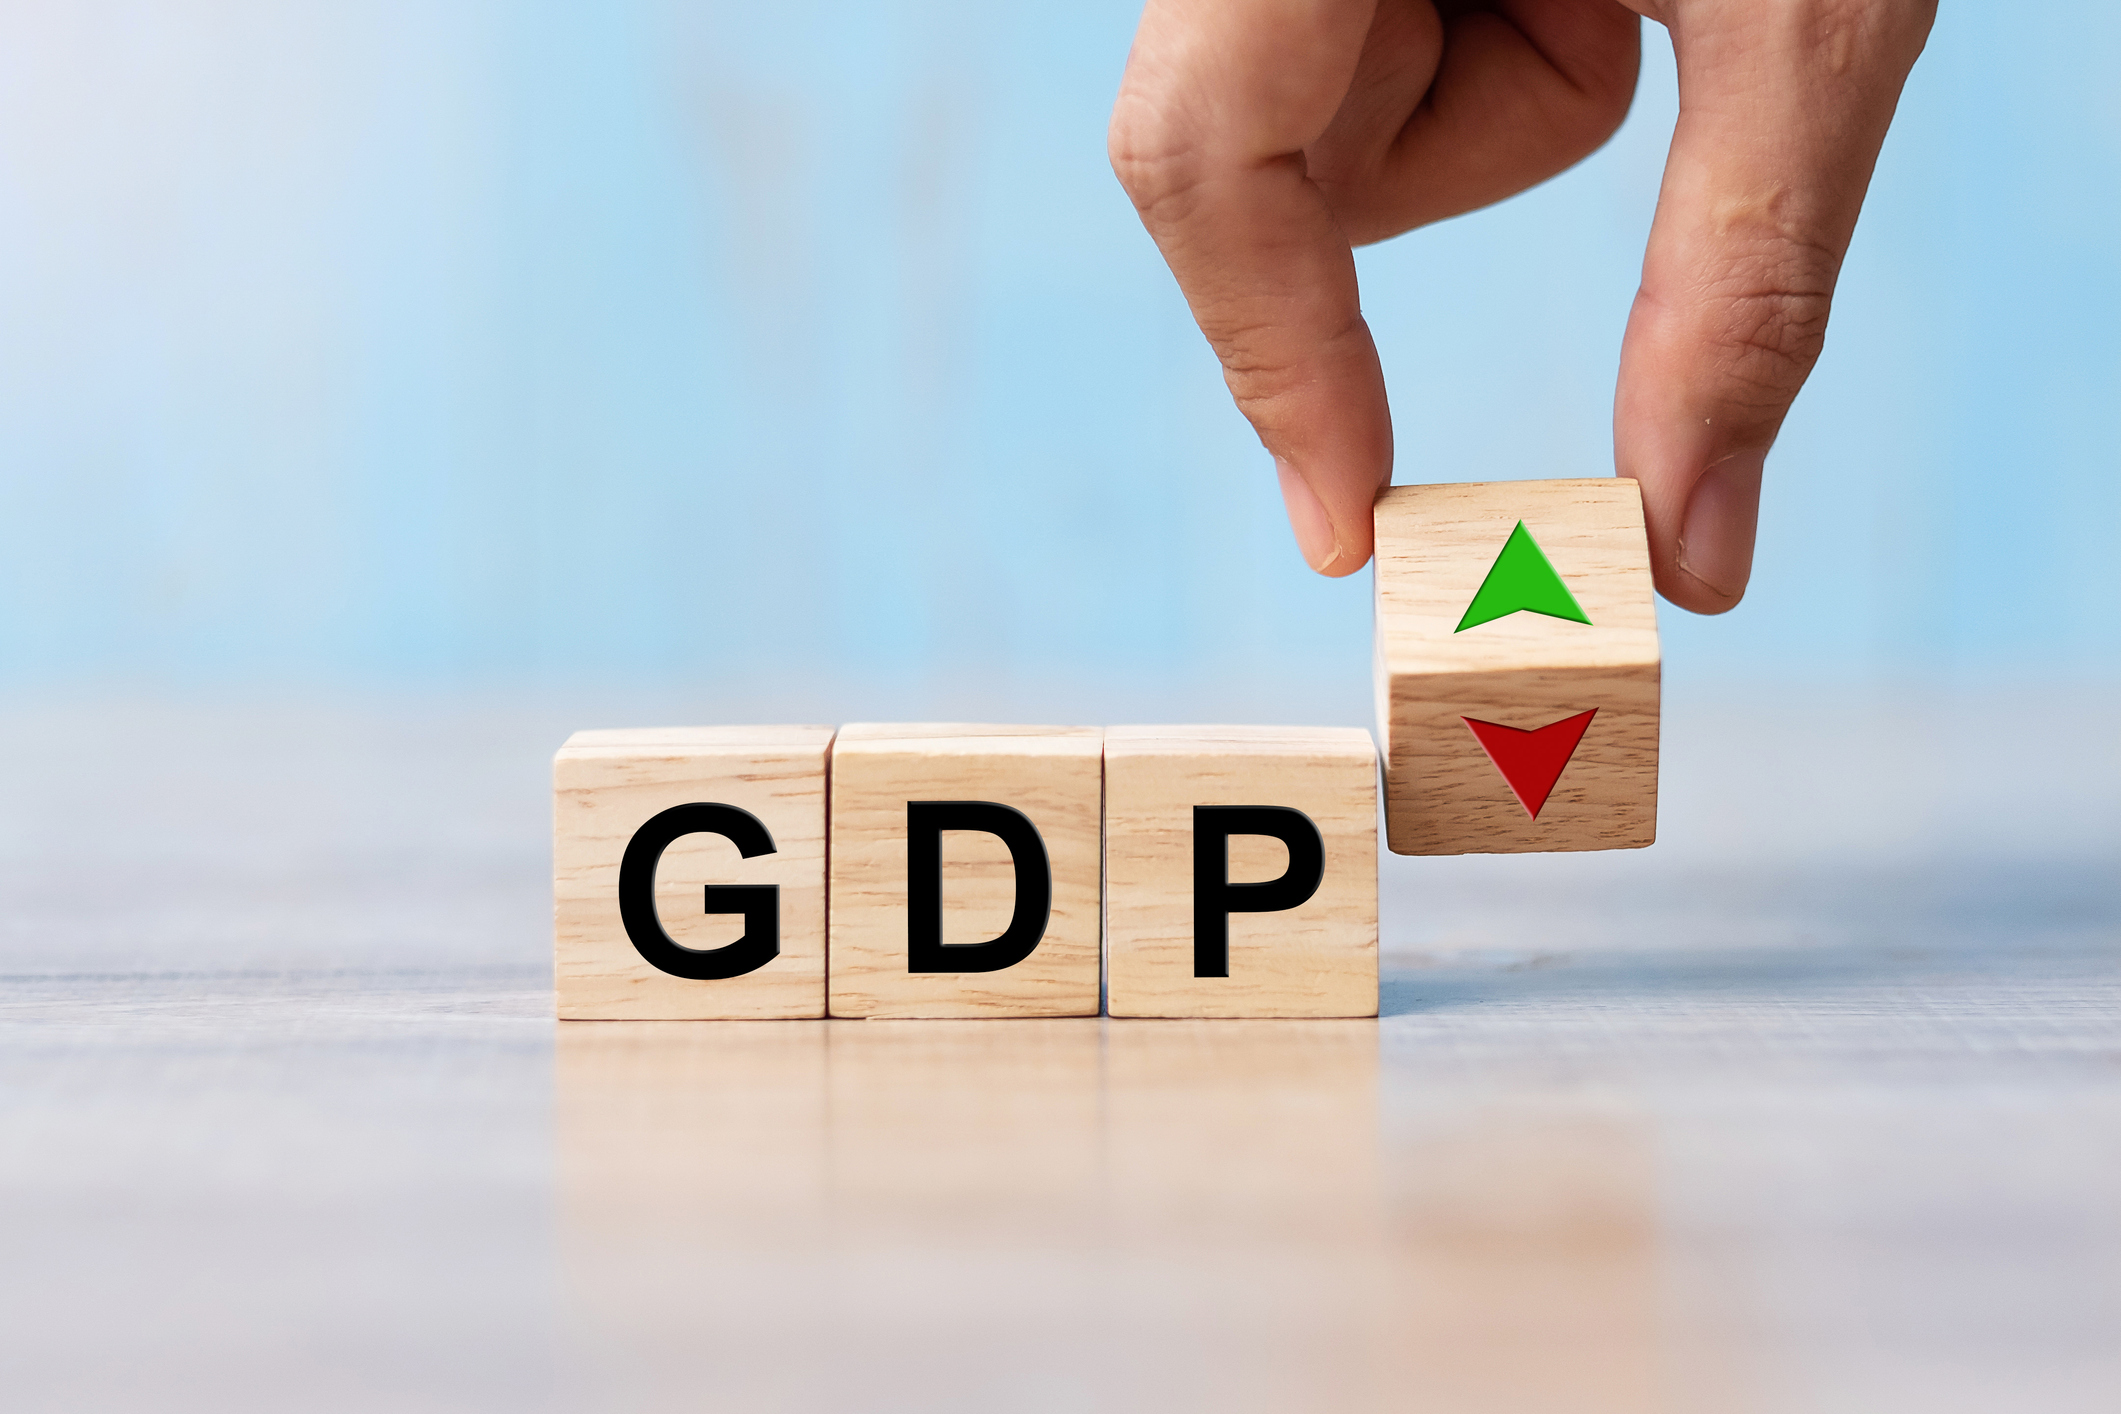 Economic Update: GDP in Q1 2022